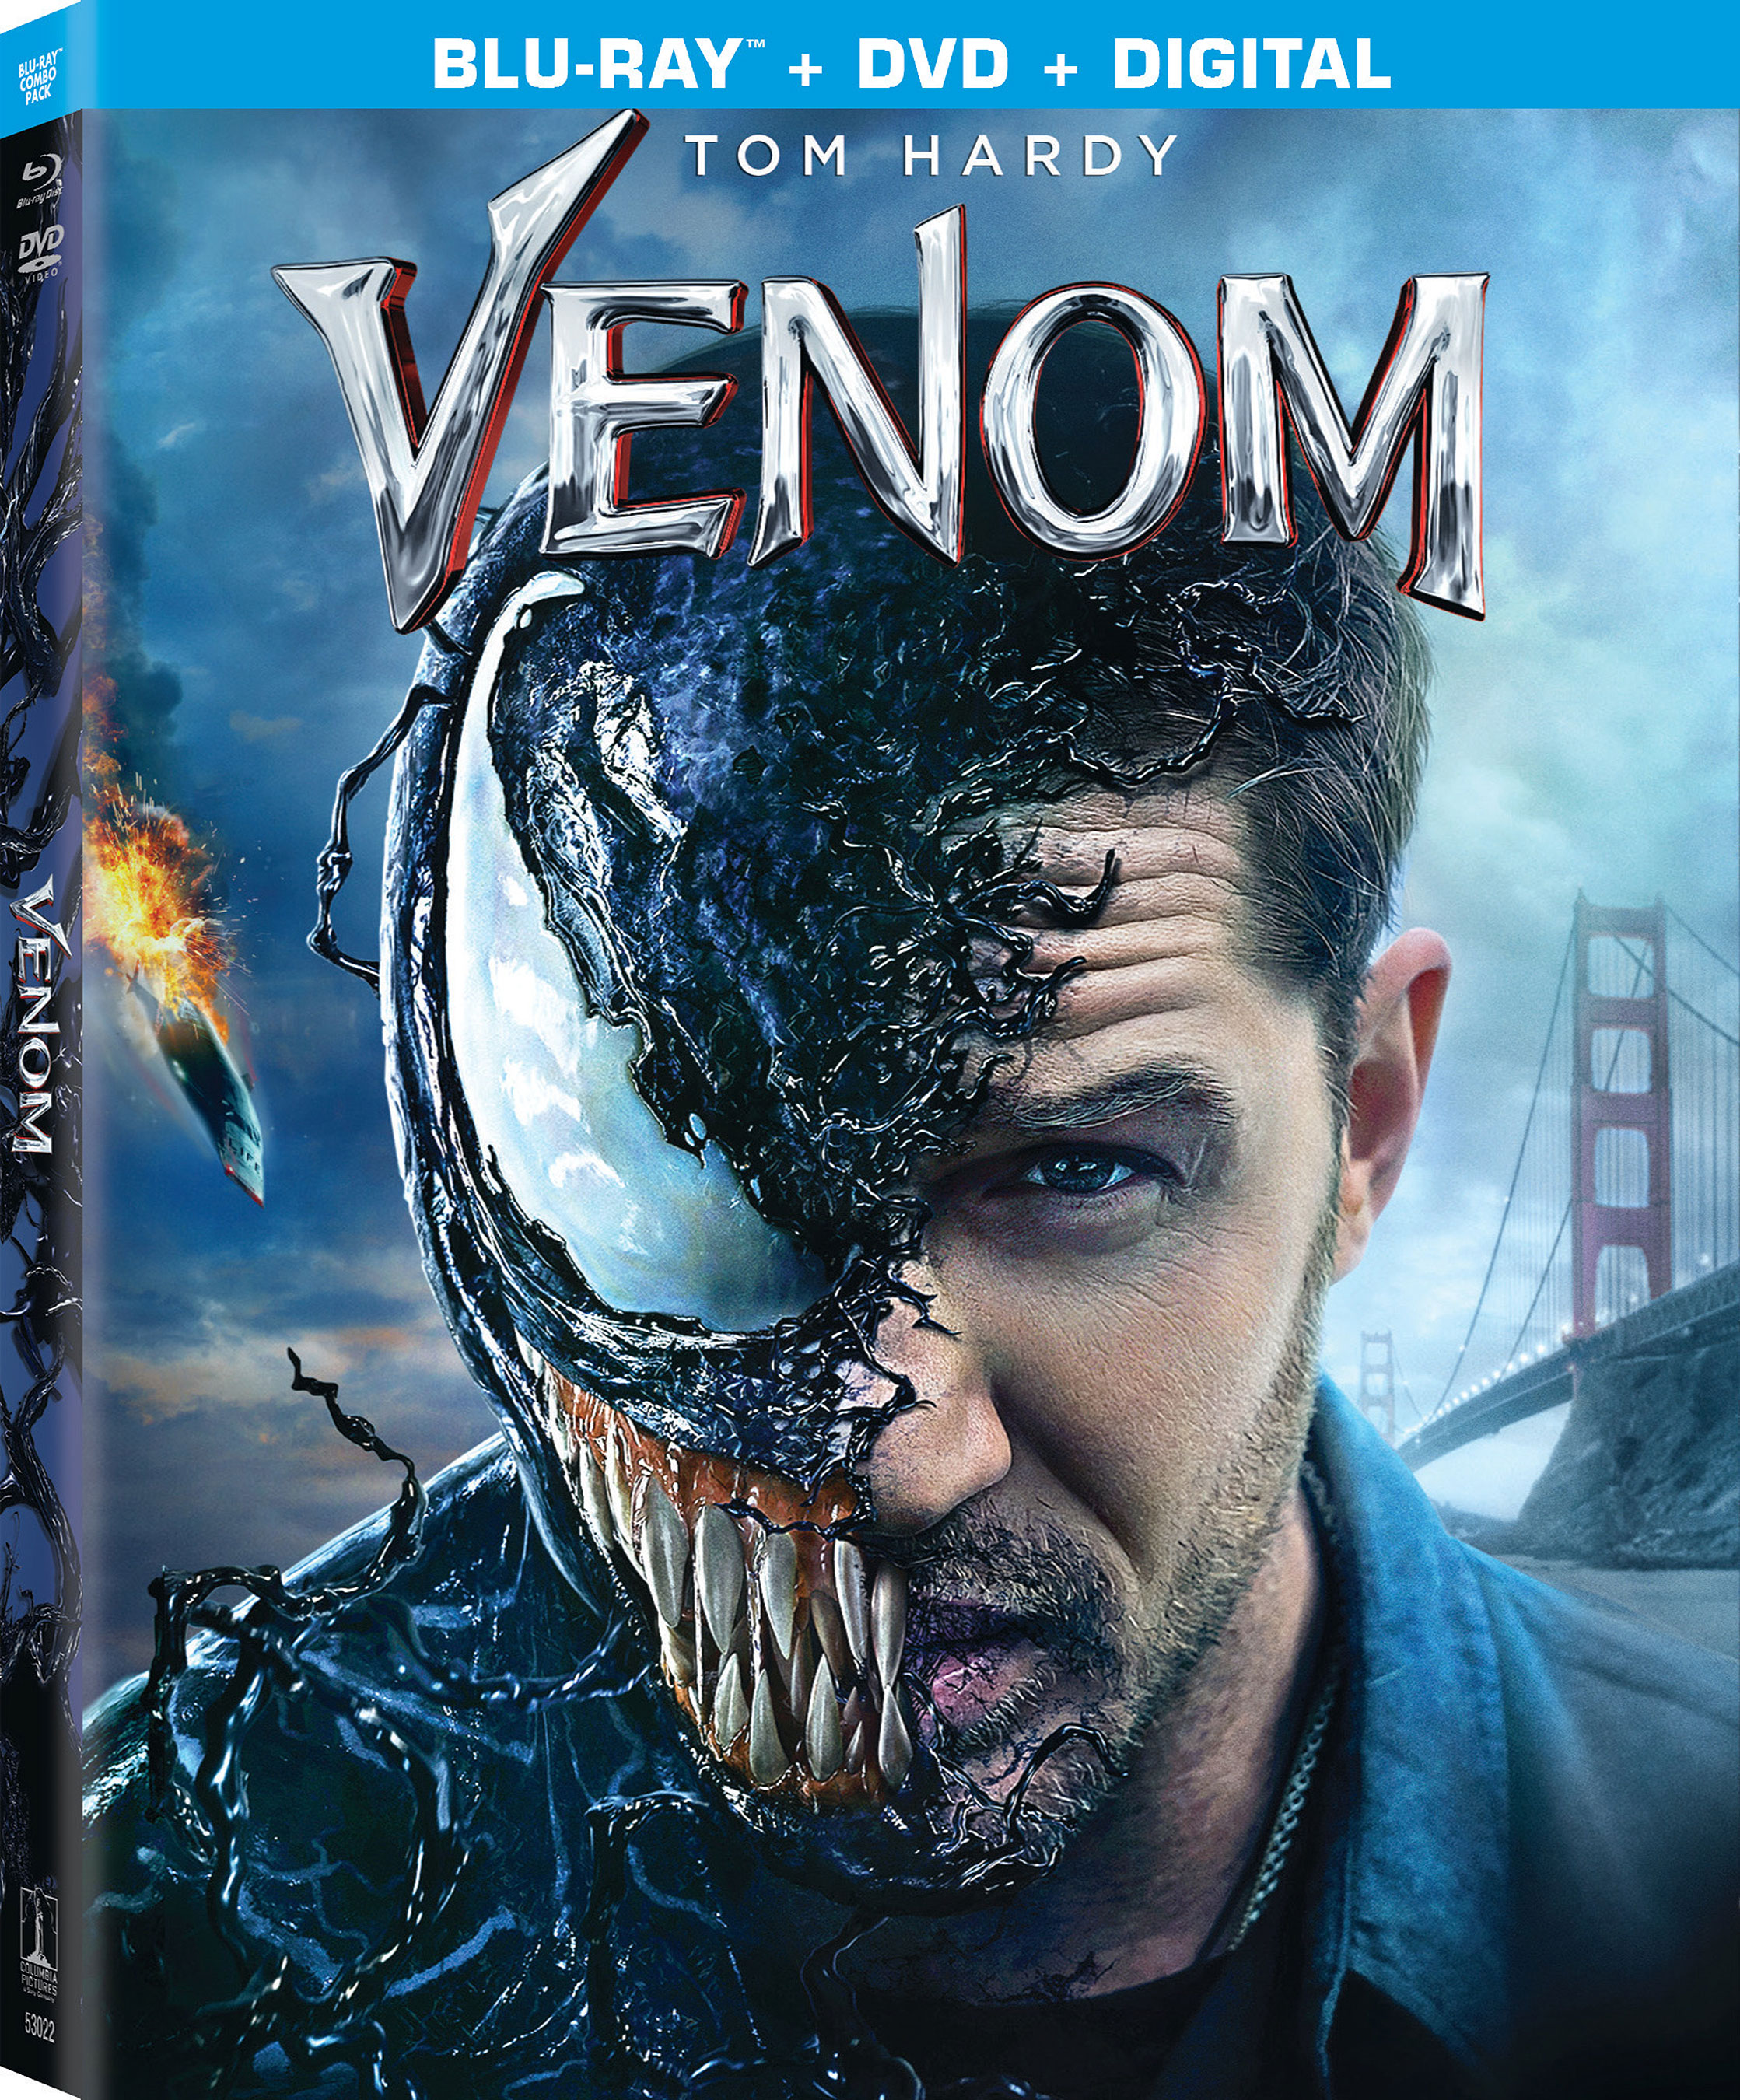 Venom Blu-Ray